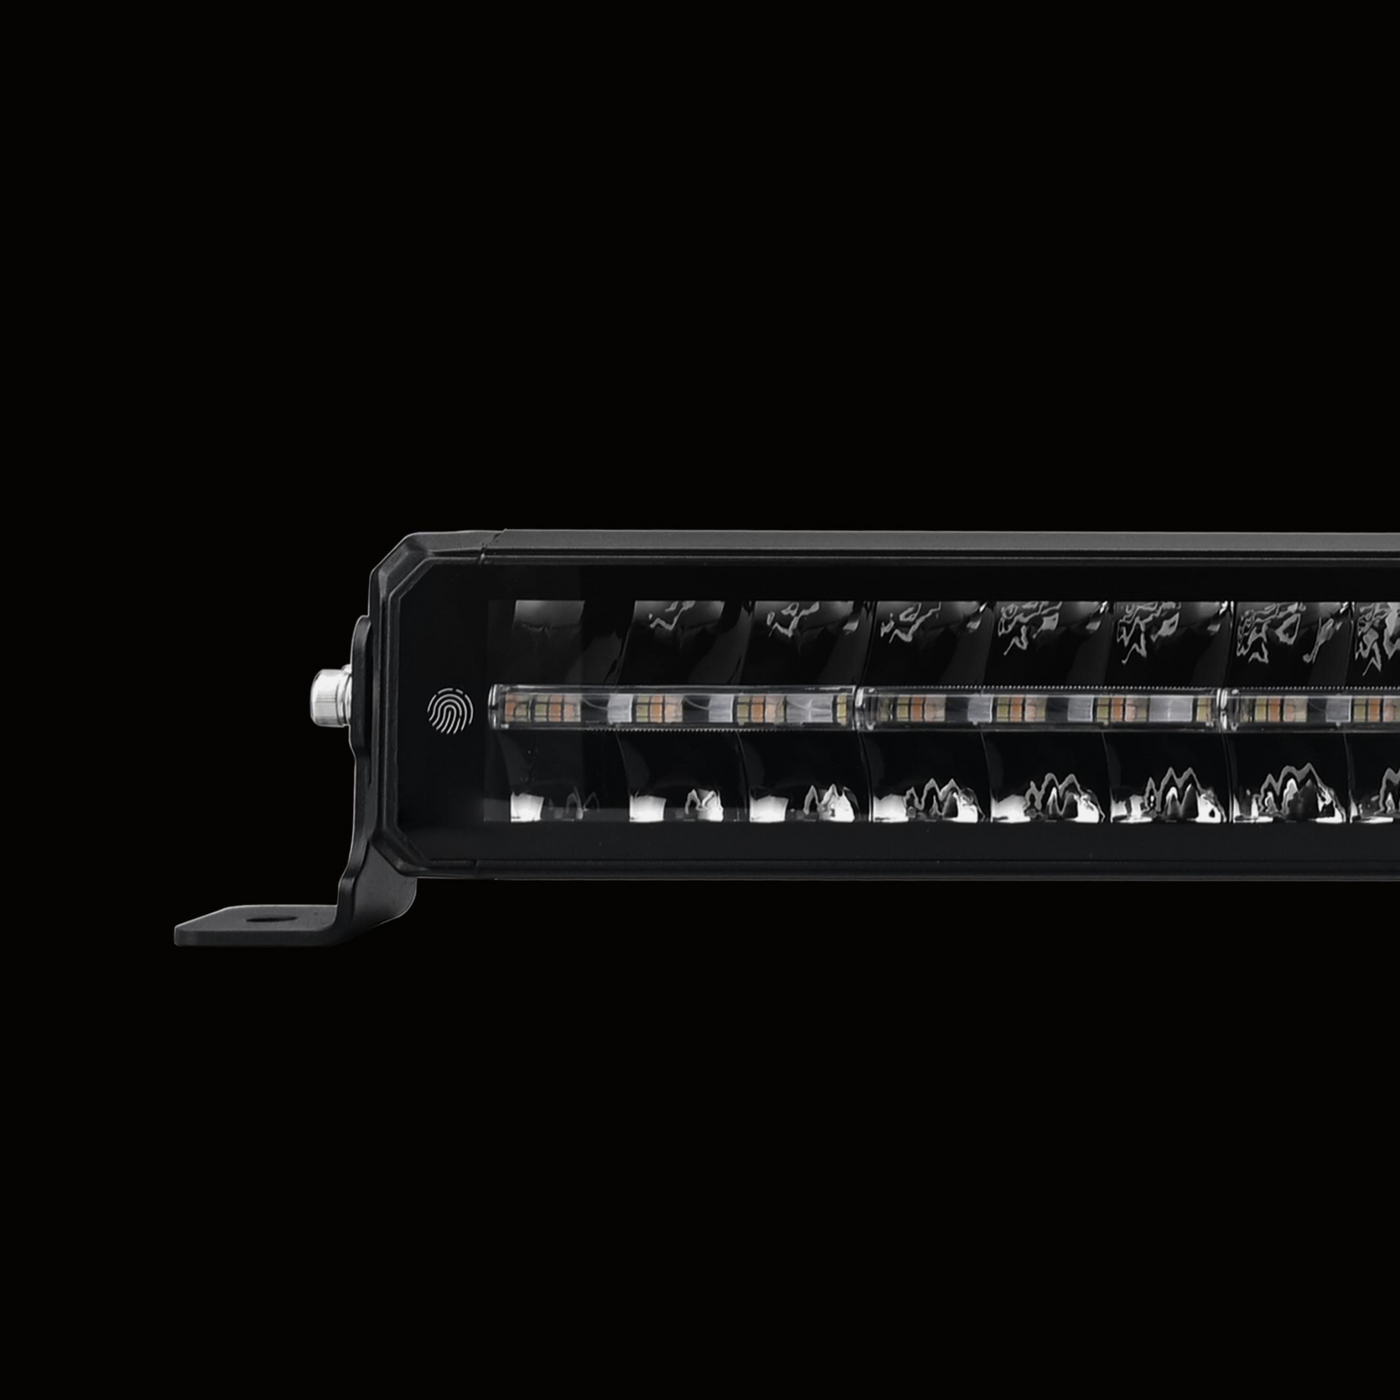 MX Series LED Light Bar